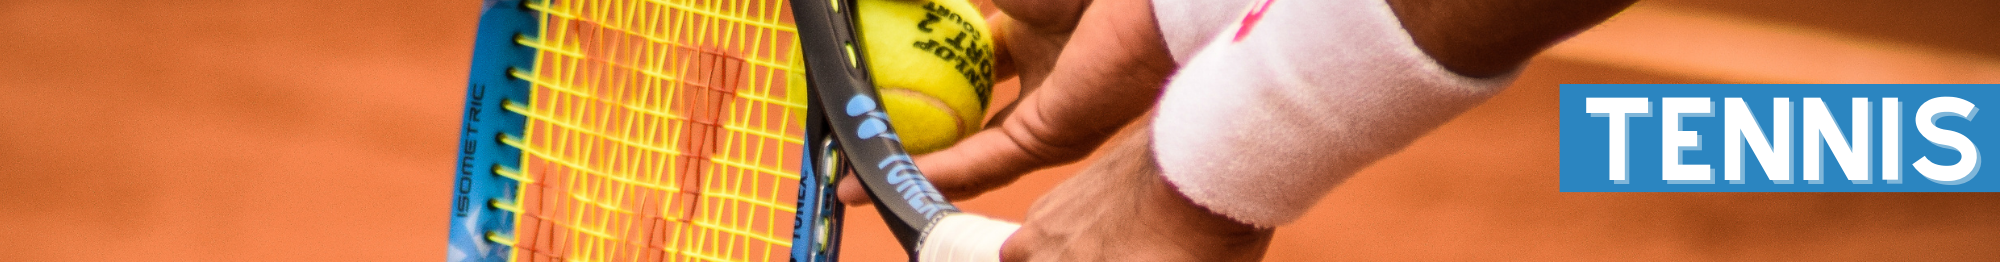 Tennis19